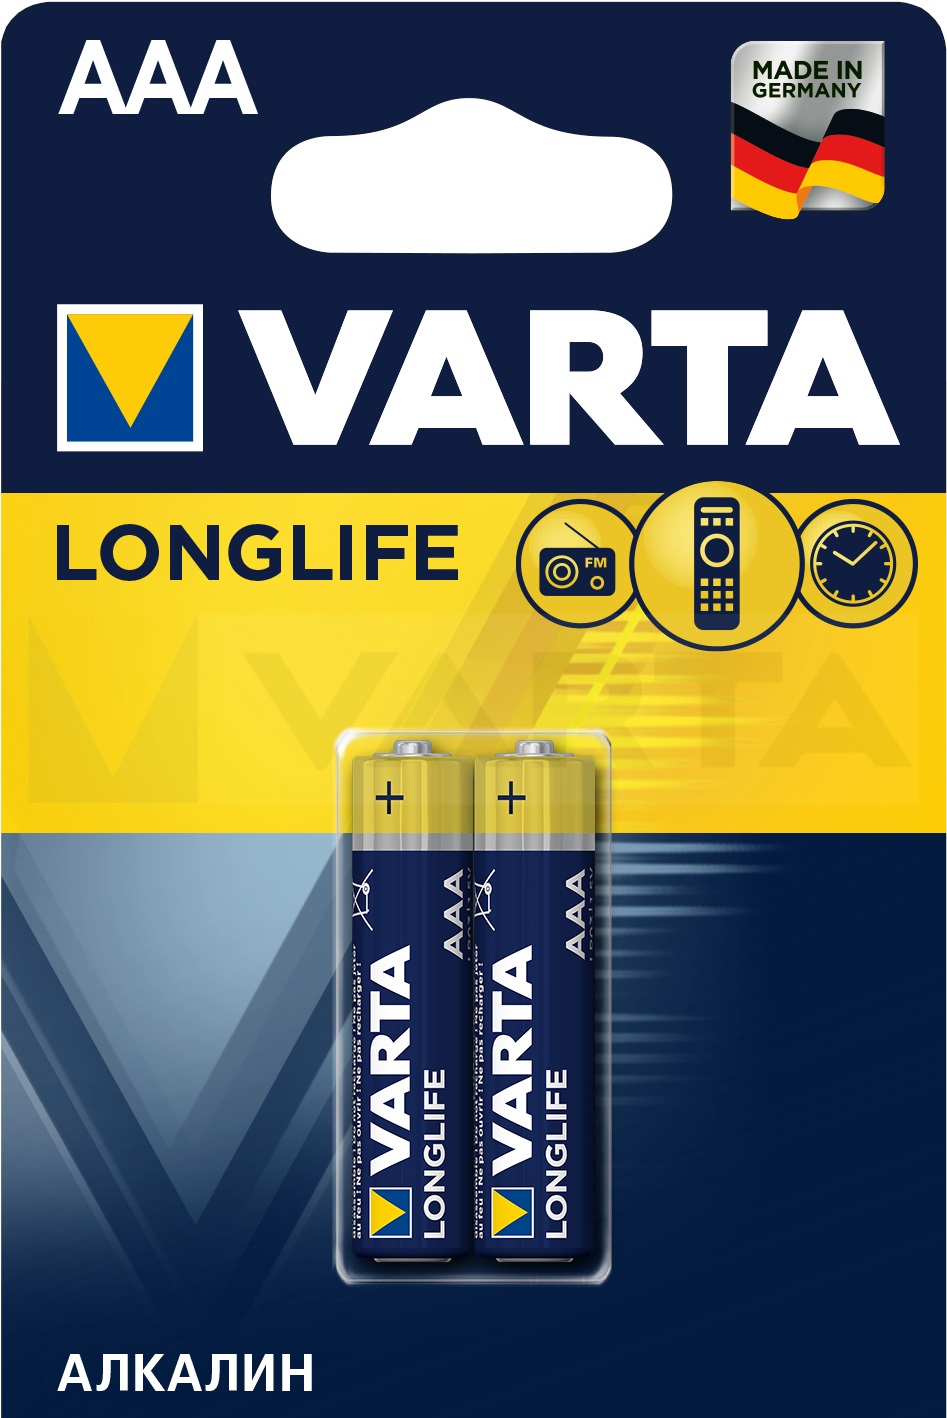 Батарейки VARTA LONGLIFE AAA бл. 2 (рус.)